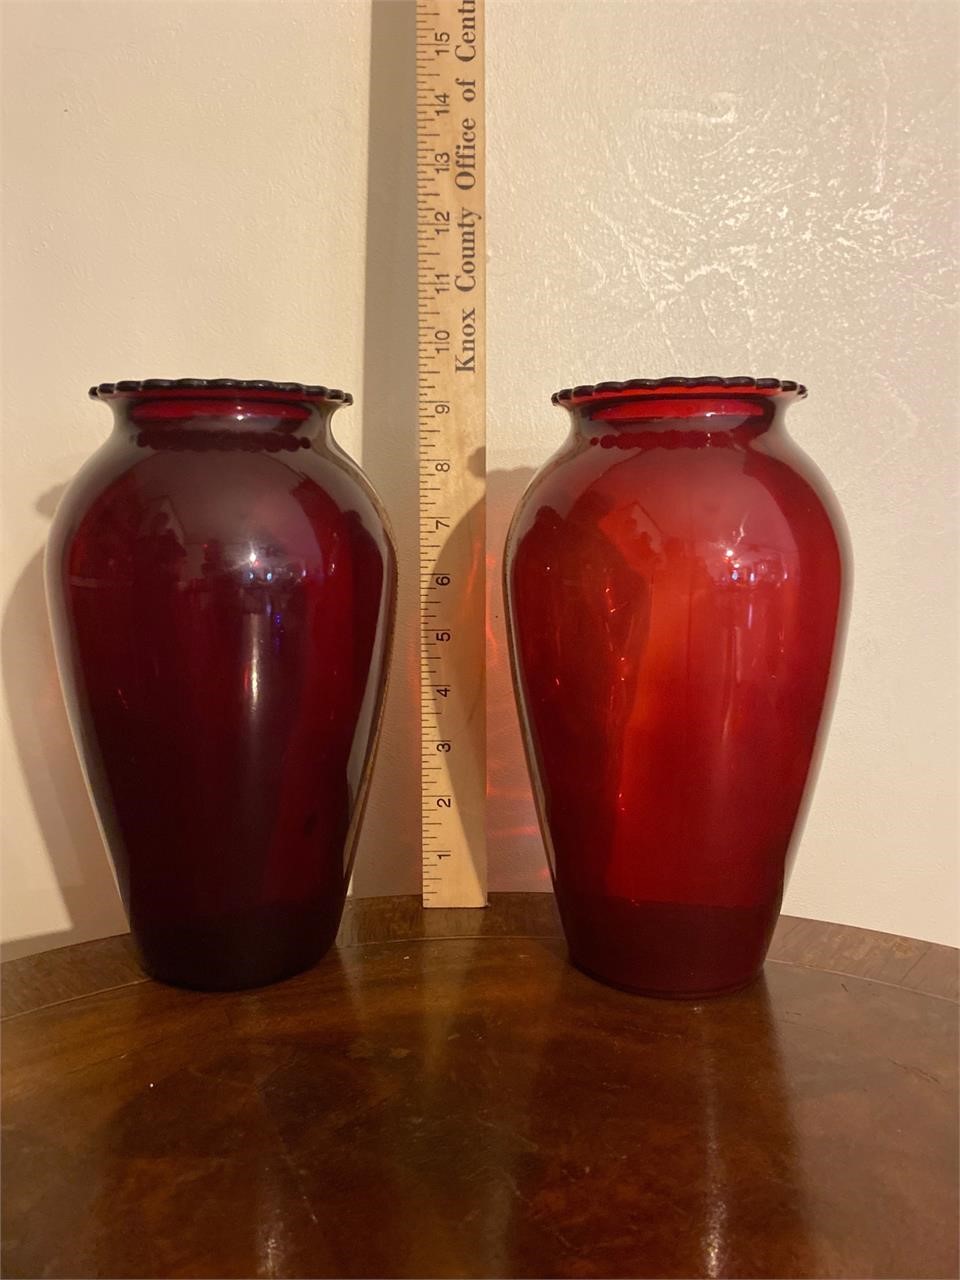 Ruby Red Vases